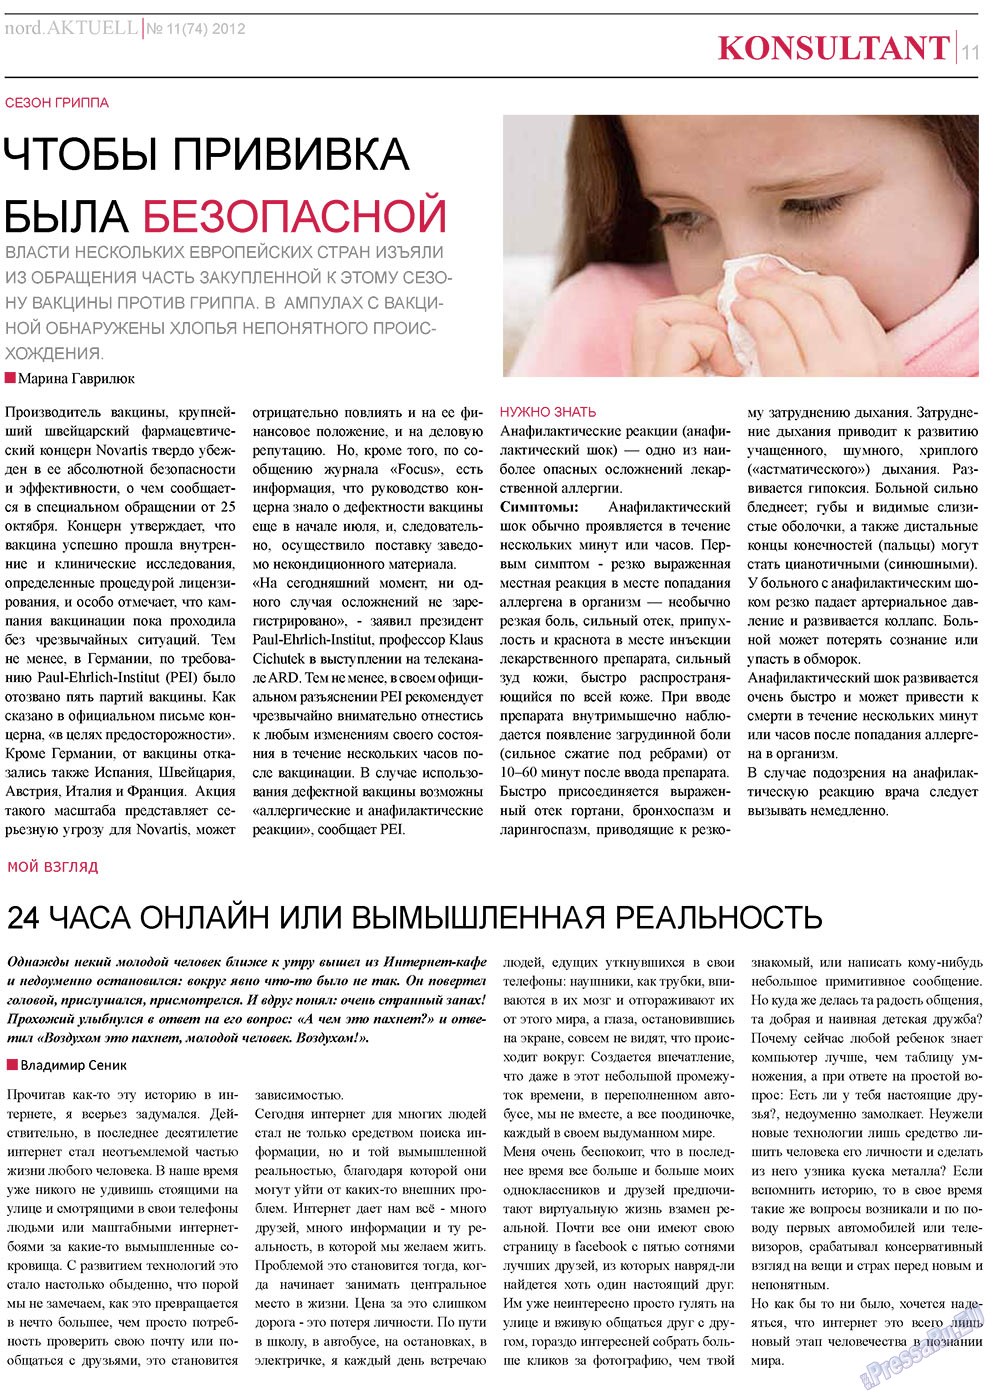 nord.Aktuell (газета). 2012 год, номер 11, стр. 11